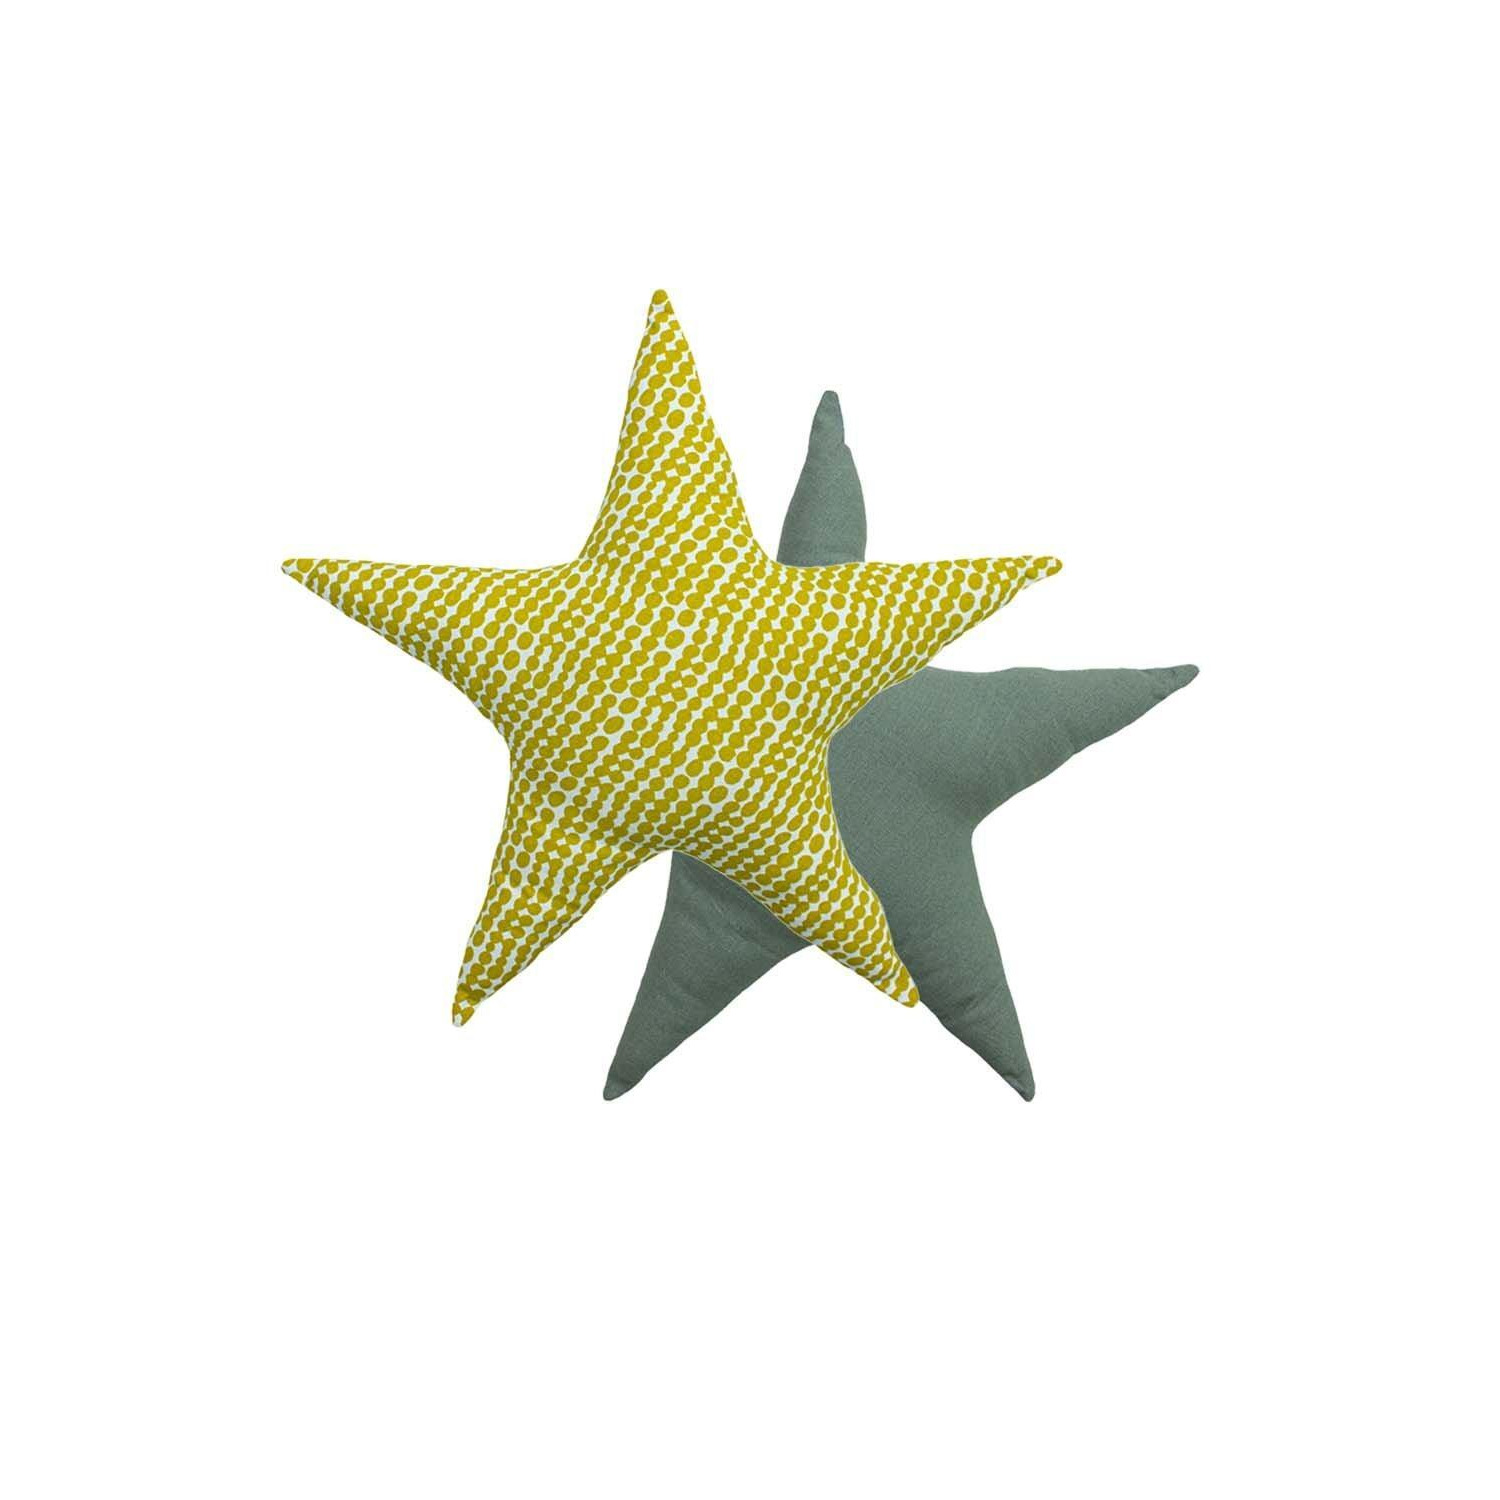 Printed Star Novelty Cushion - image 1